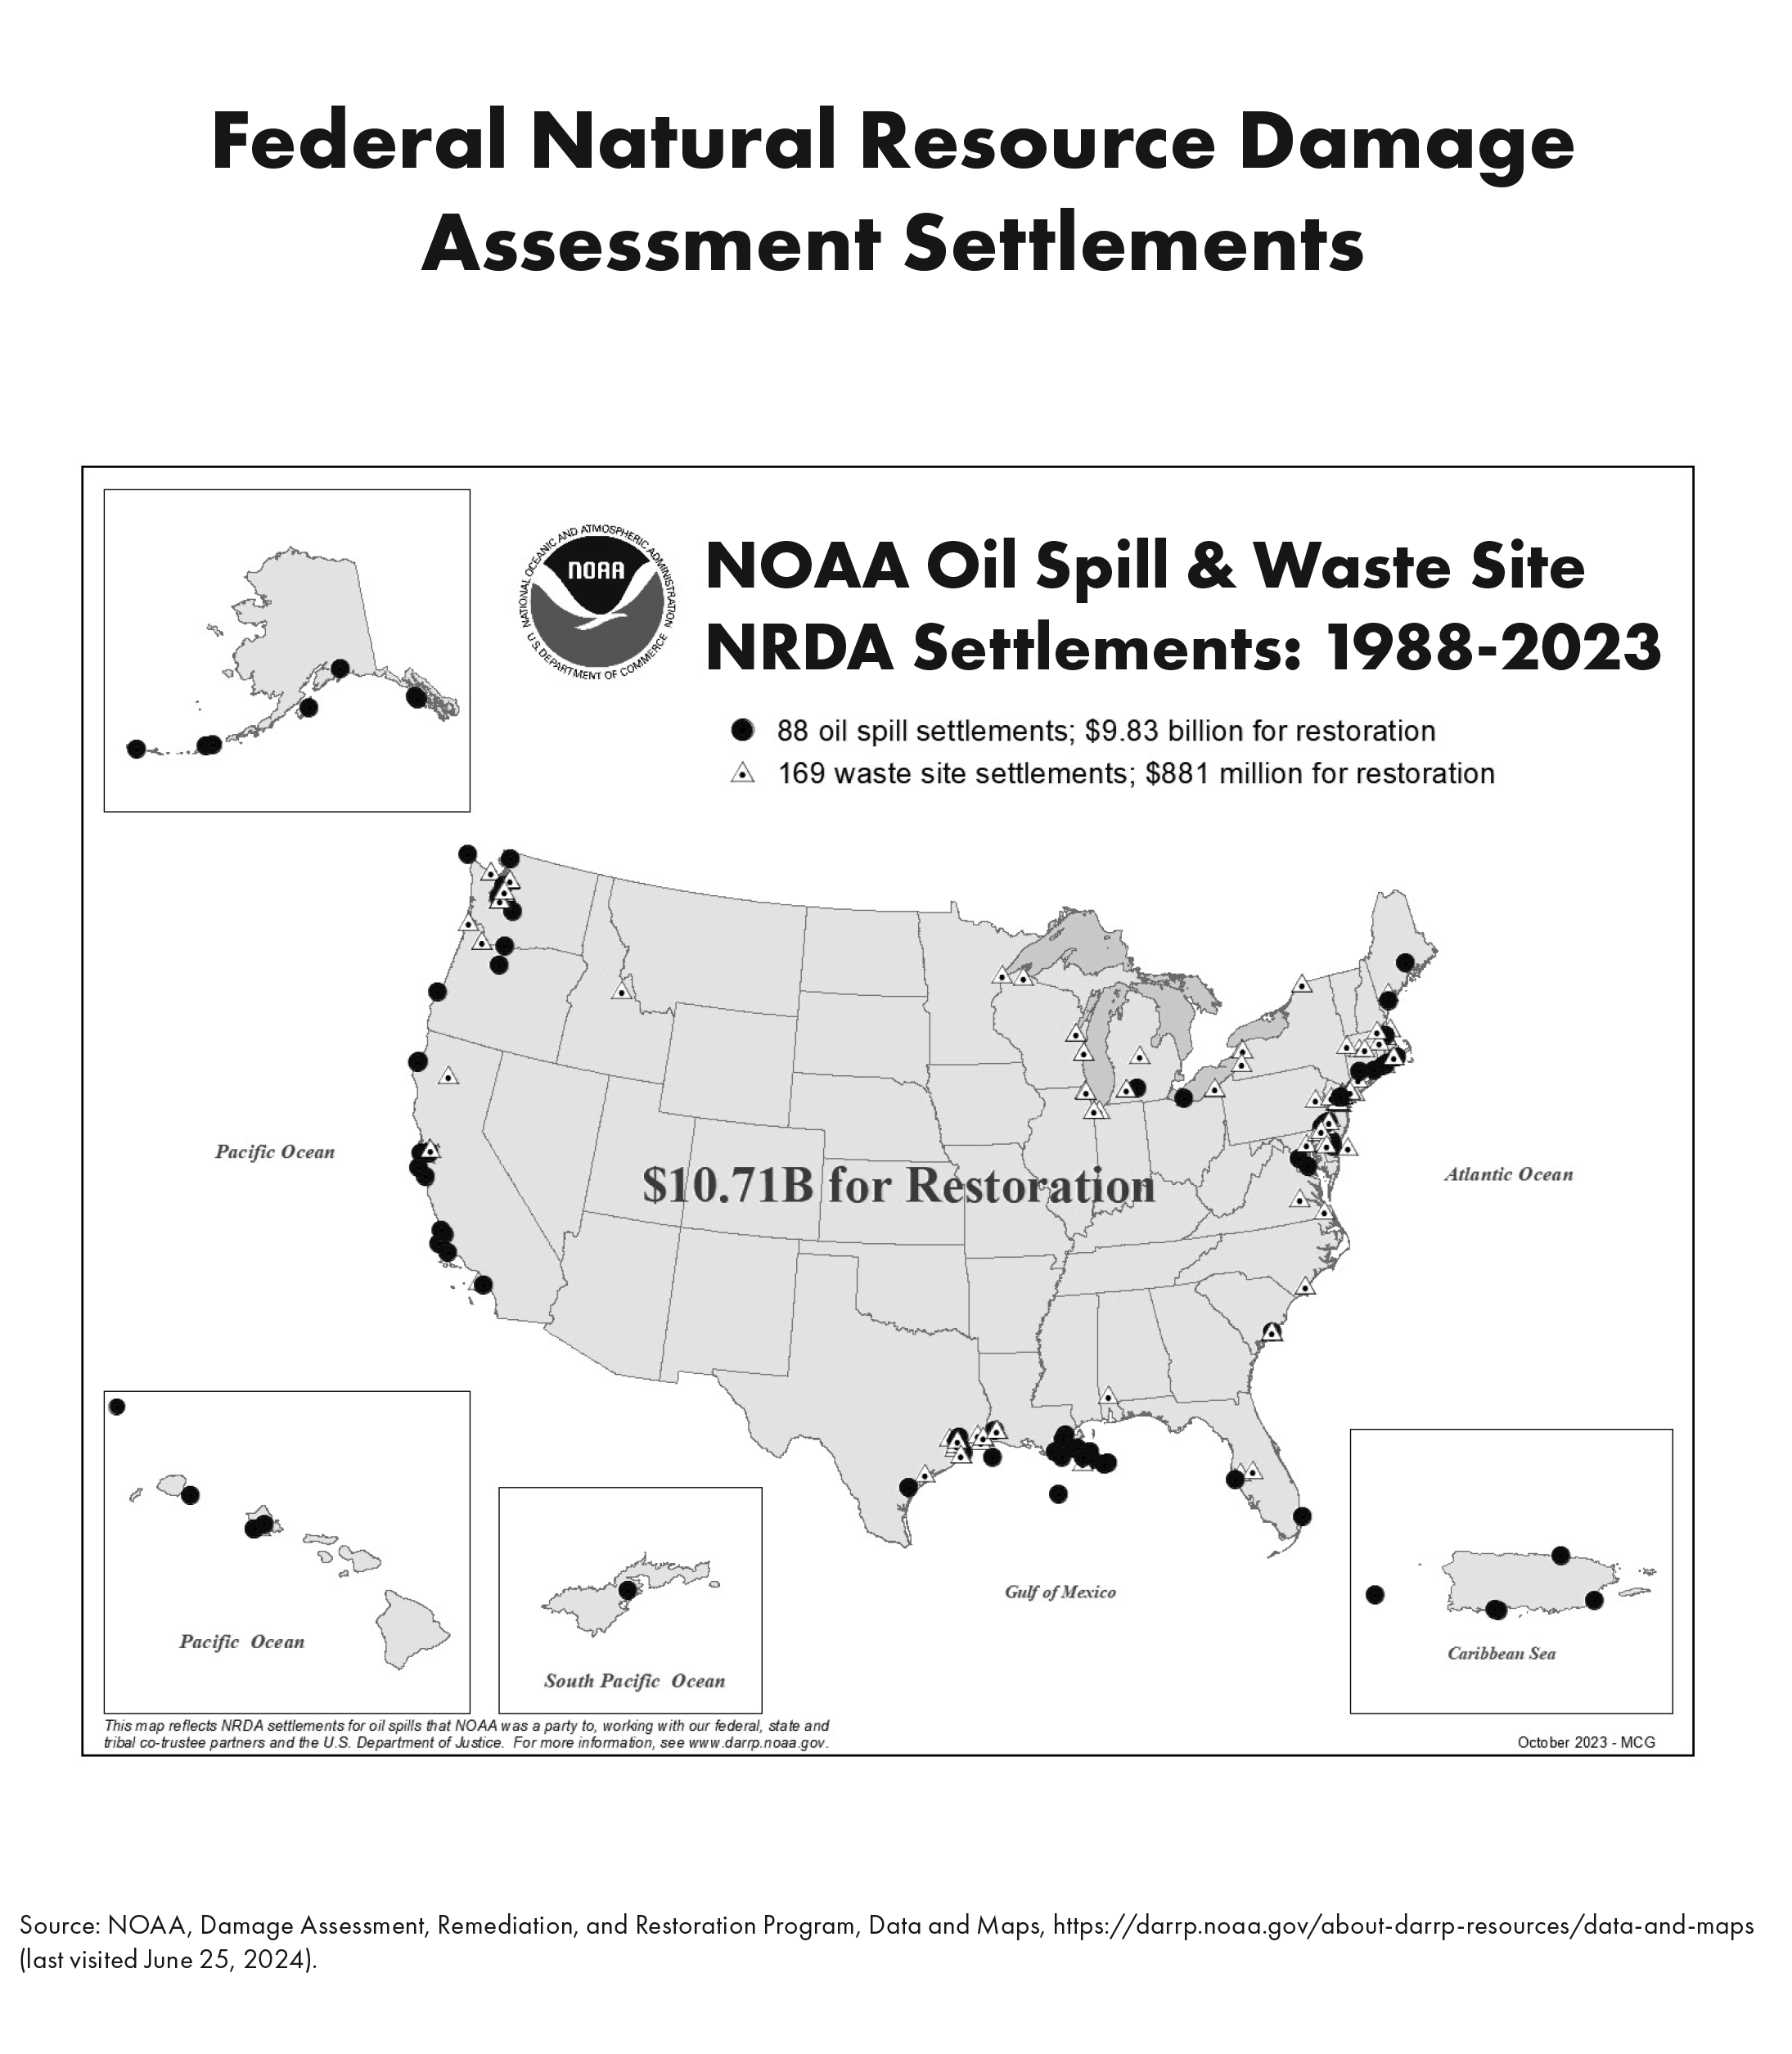 NOAA Oil Spill & Waste Site NRDA Settlements: 1988-2023